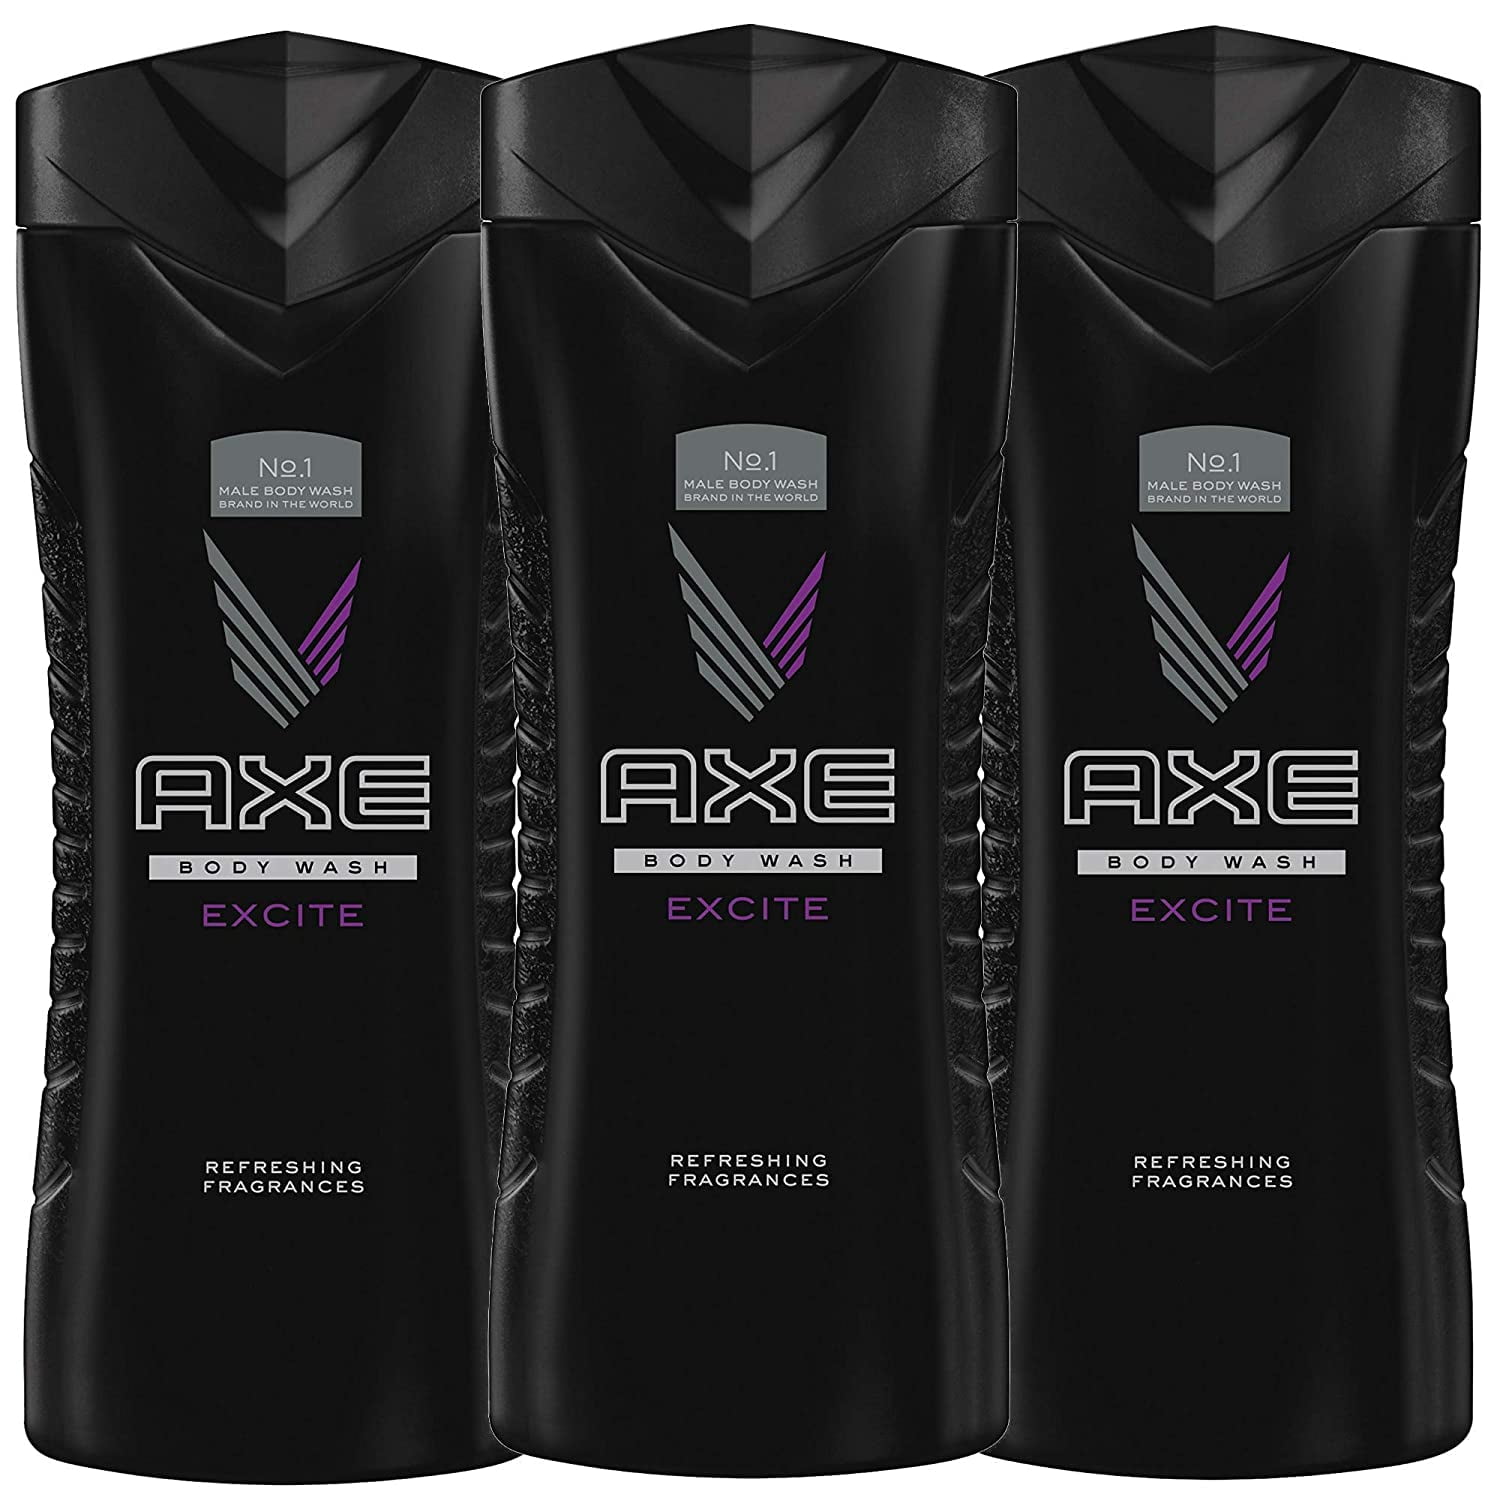 Axe Refreshing Body Wash Shower Gel, Excite, Pack of 3, (13.52 Fl. Oz/400  ml Each)